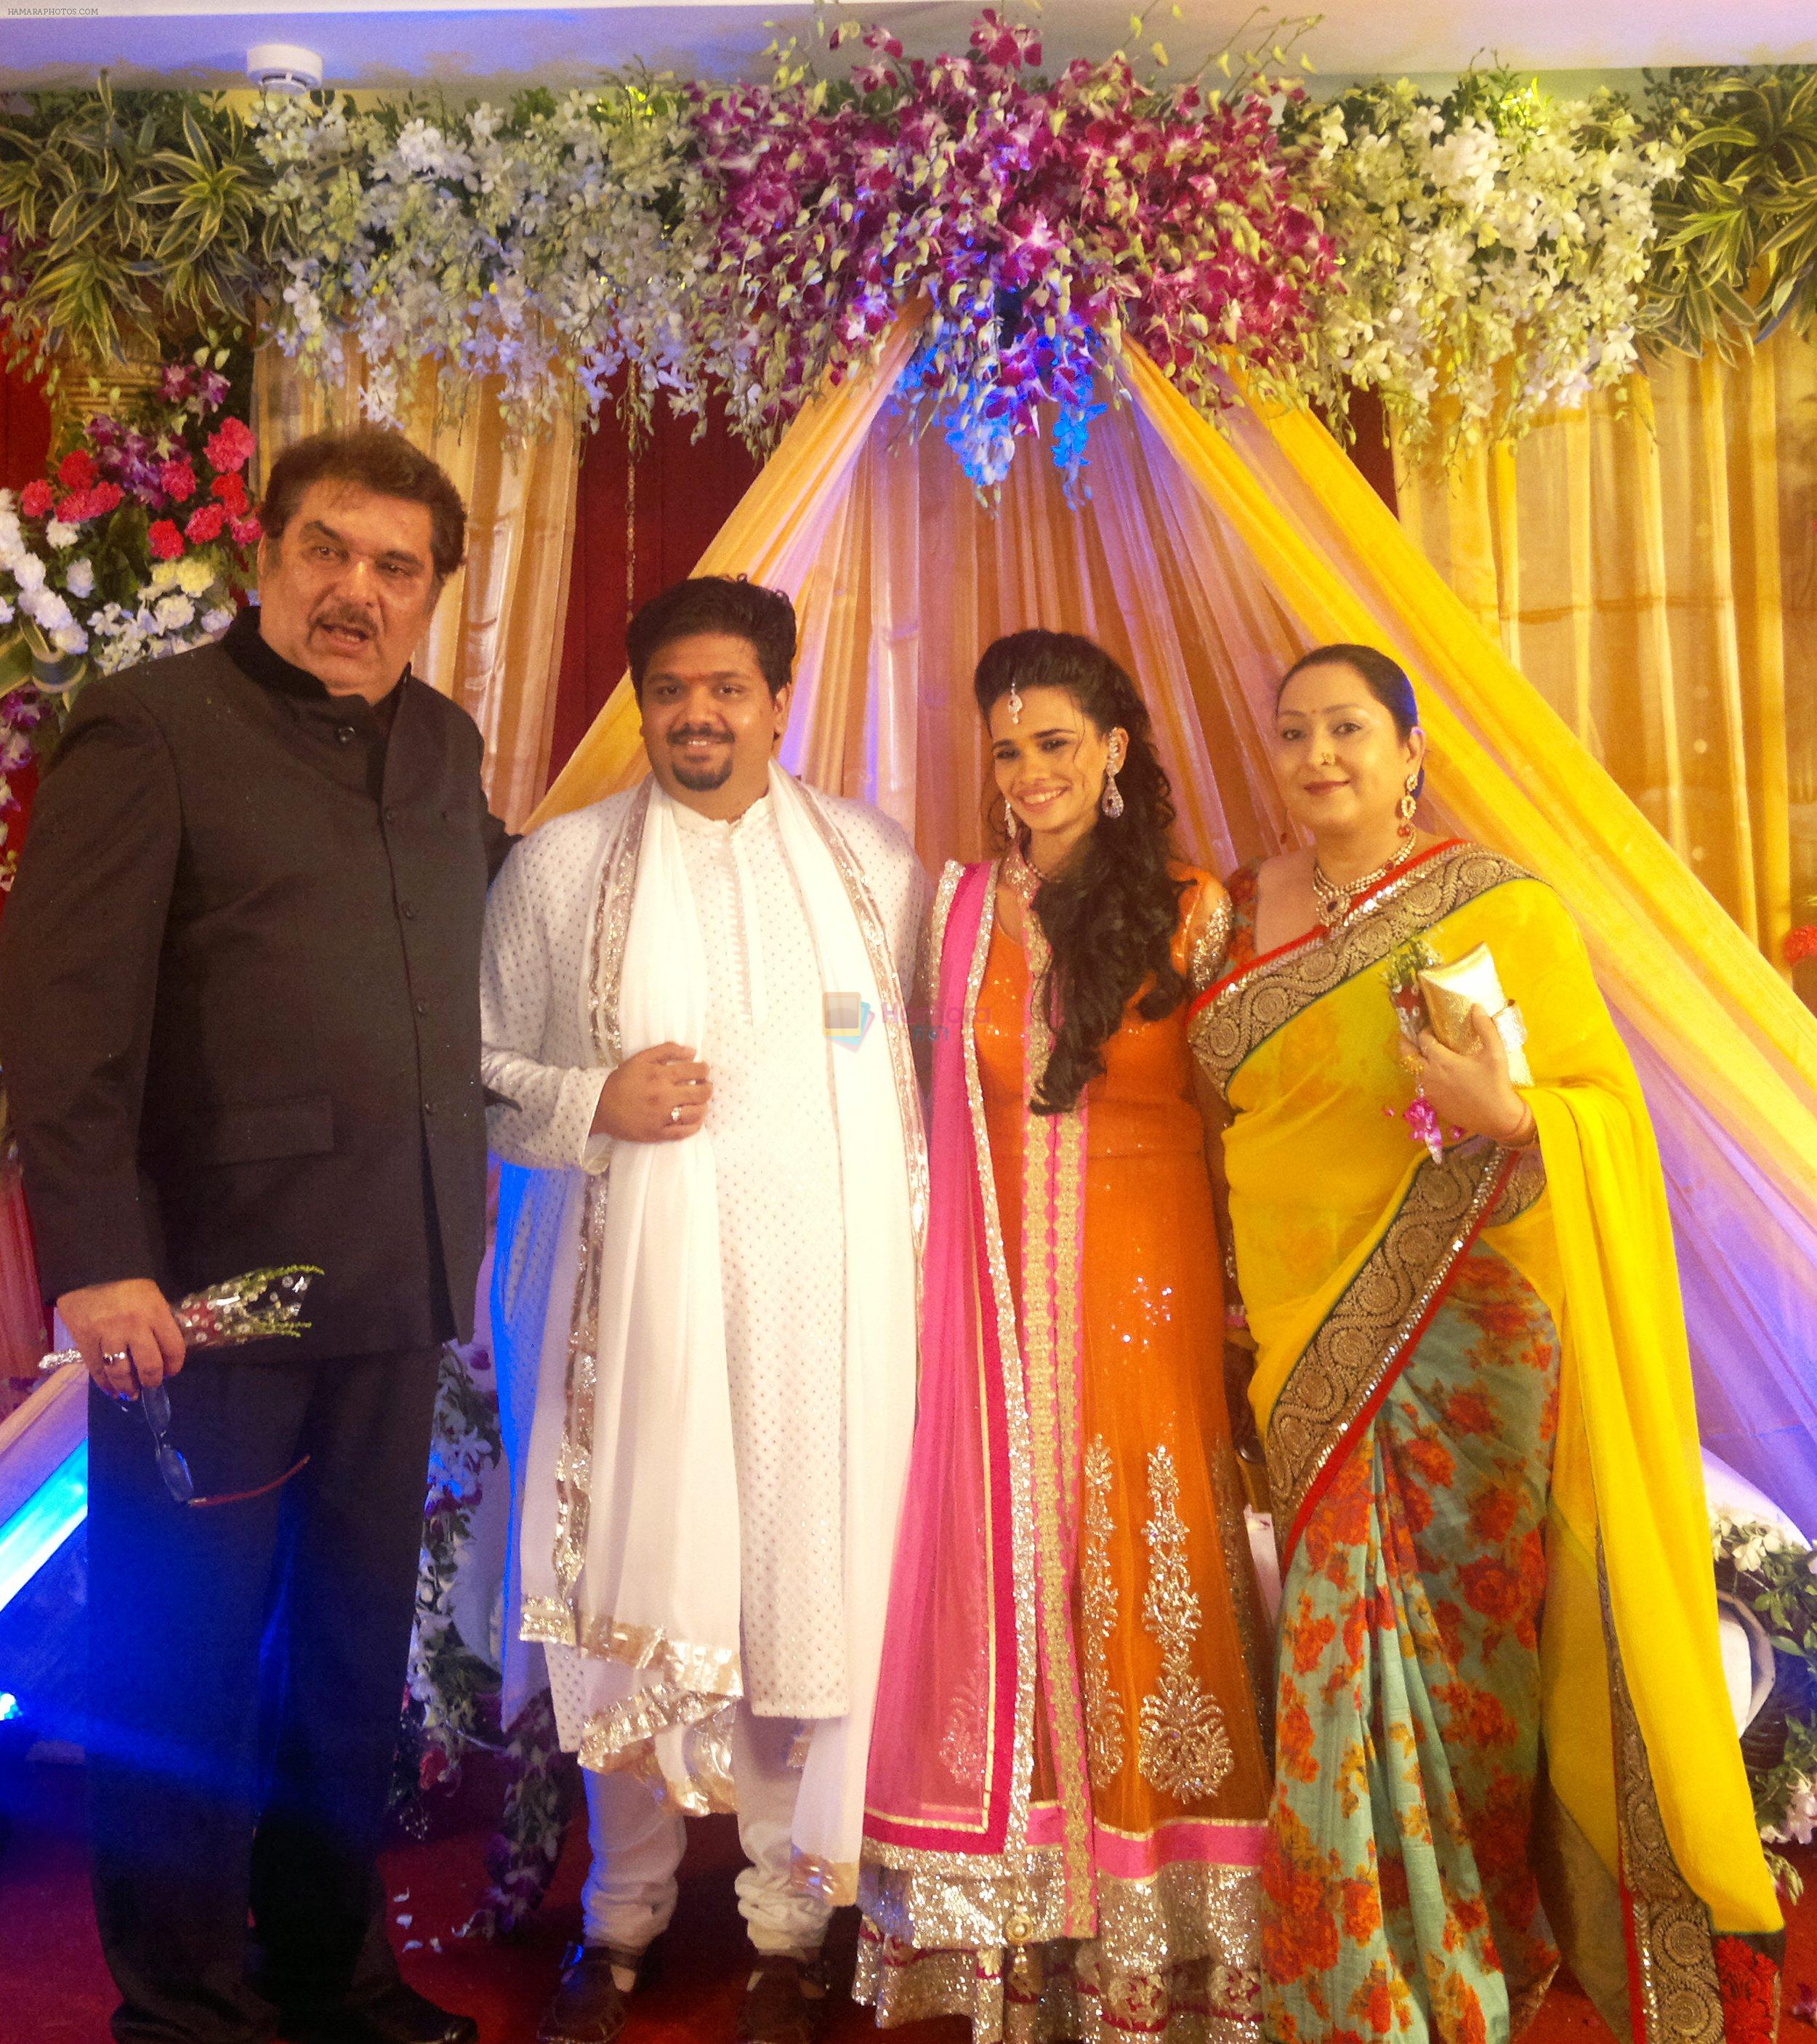 raza murad, rahul thackeray, aditi redkar and shahrukh raza murad  at rahul thackeray-Aditi Redkar engagement